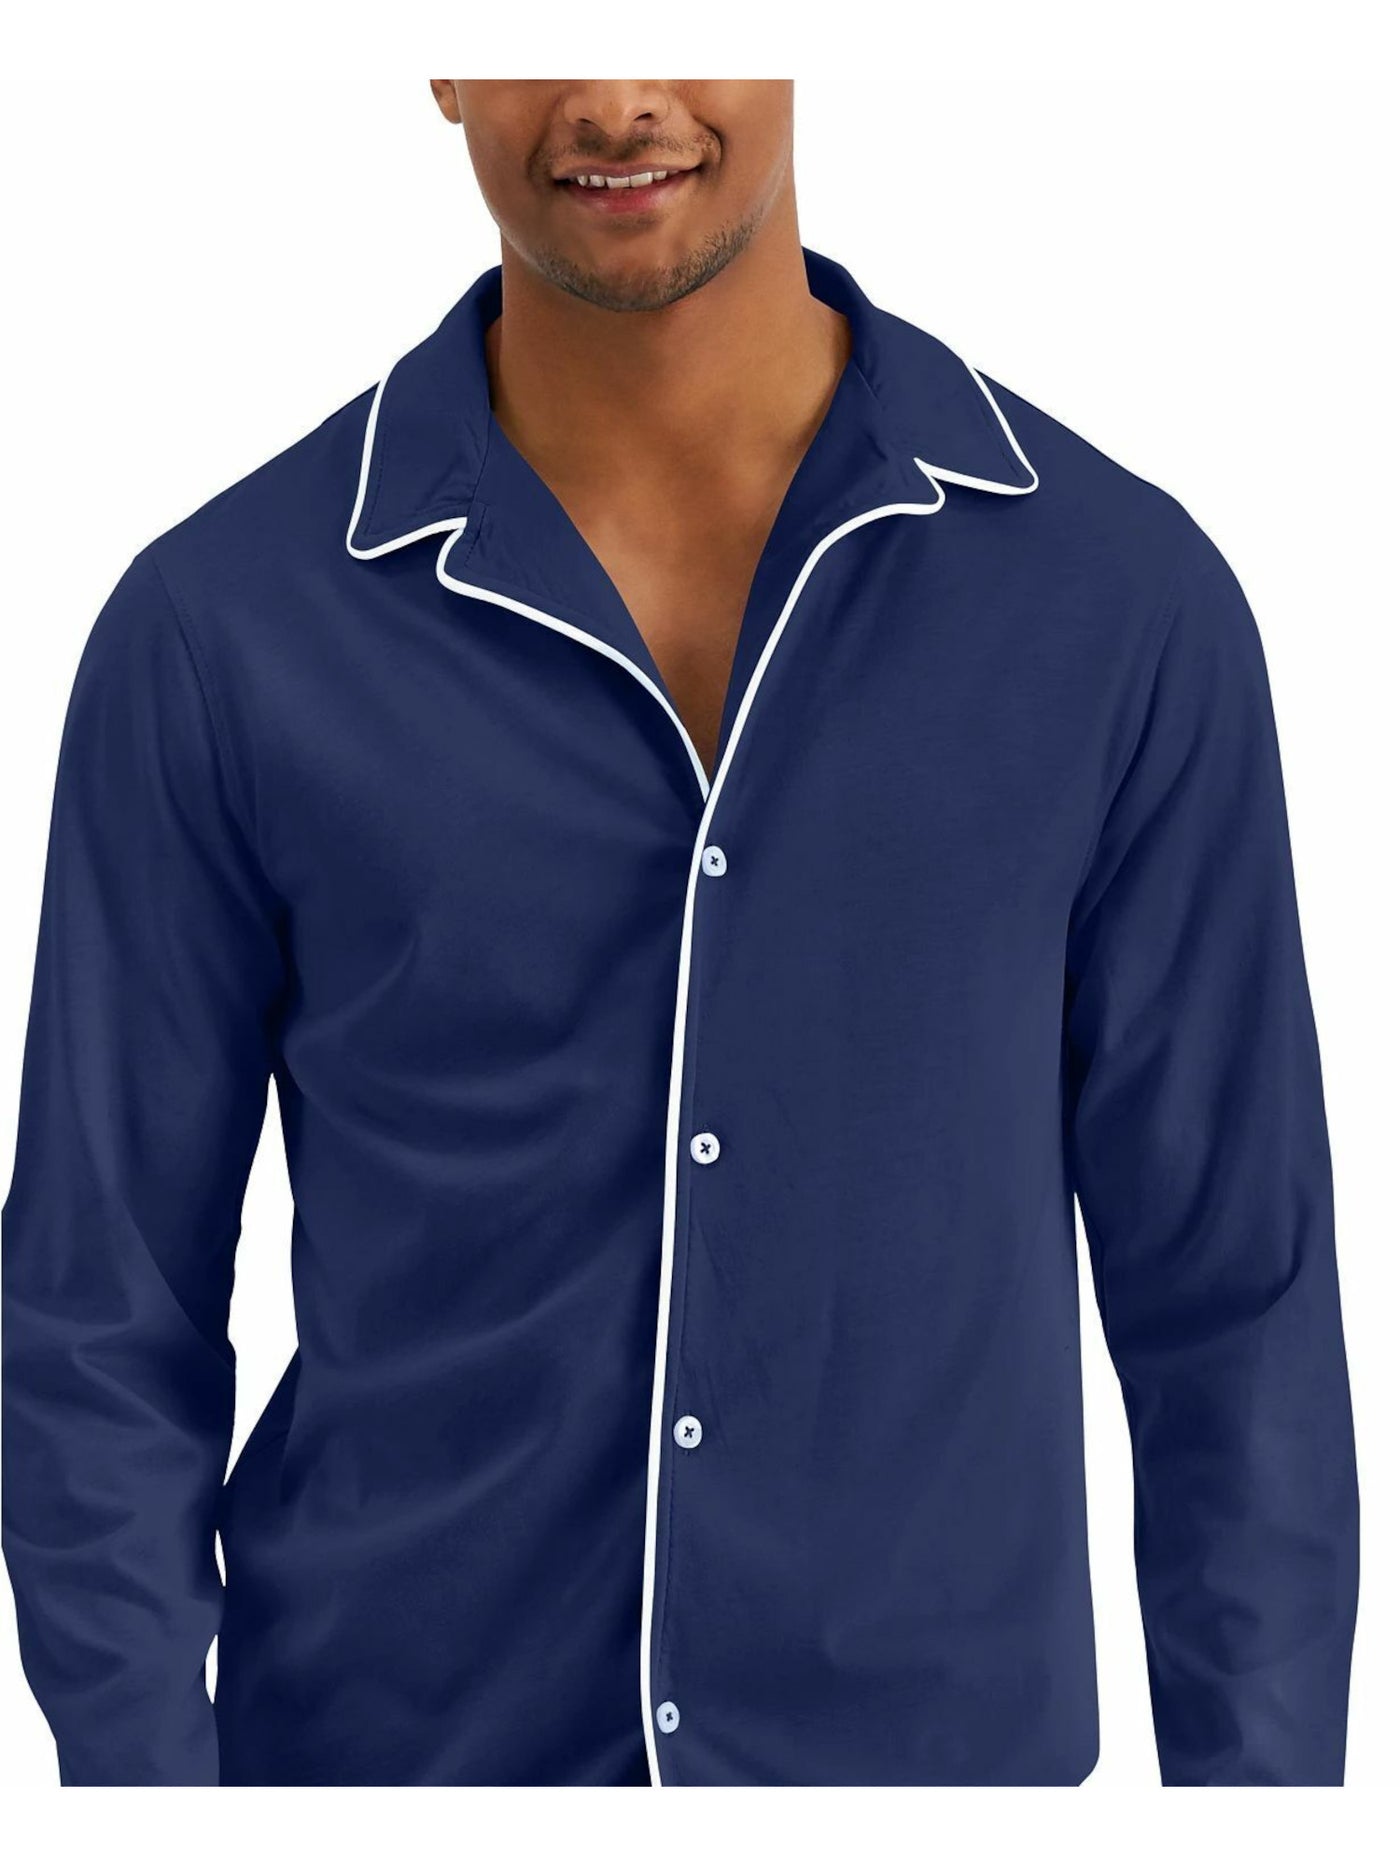 CLUBROOM Intimates Navy Cotton Blend Notched Collar Sleep Shirt Pajama Top XL